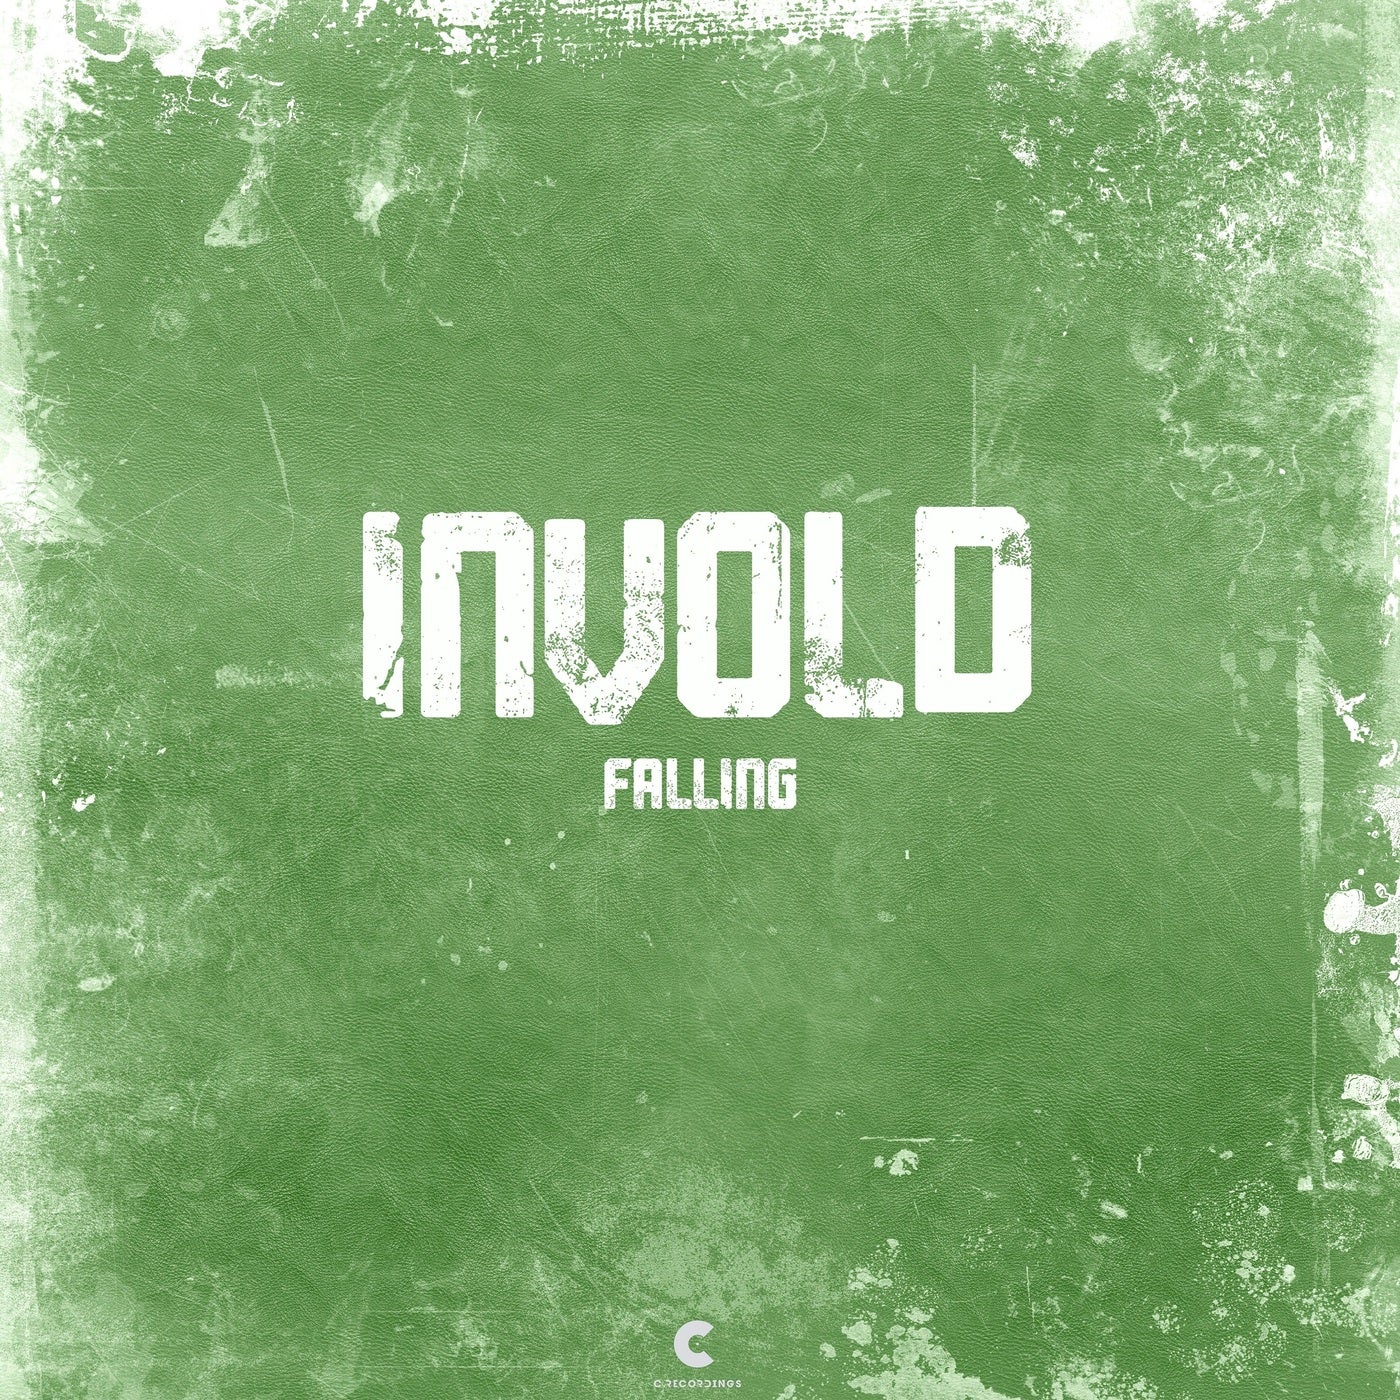 Invold - Falling [C Recordings]